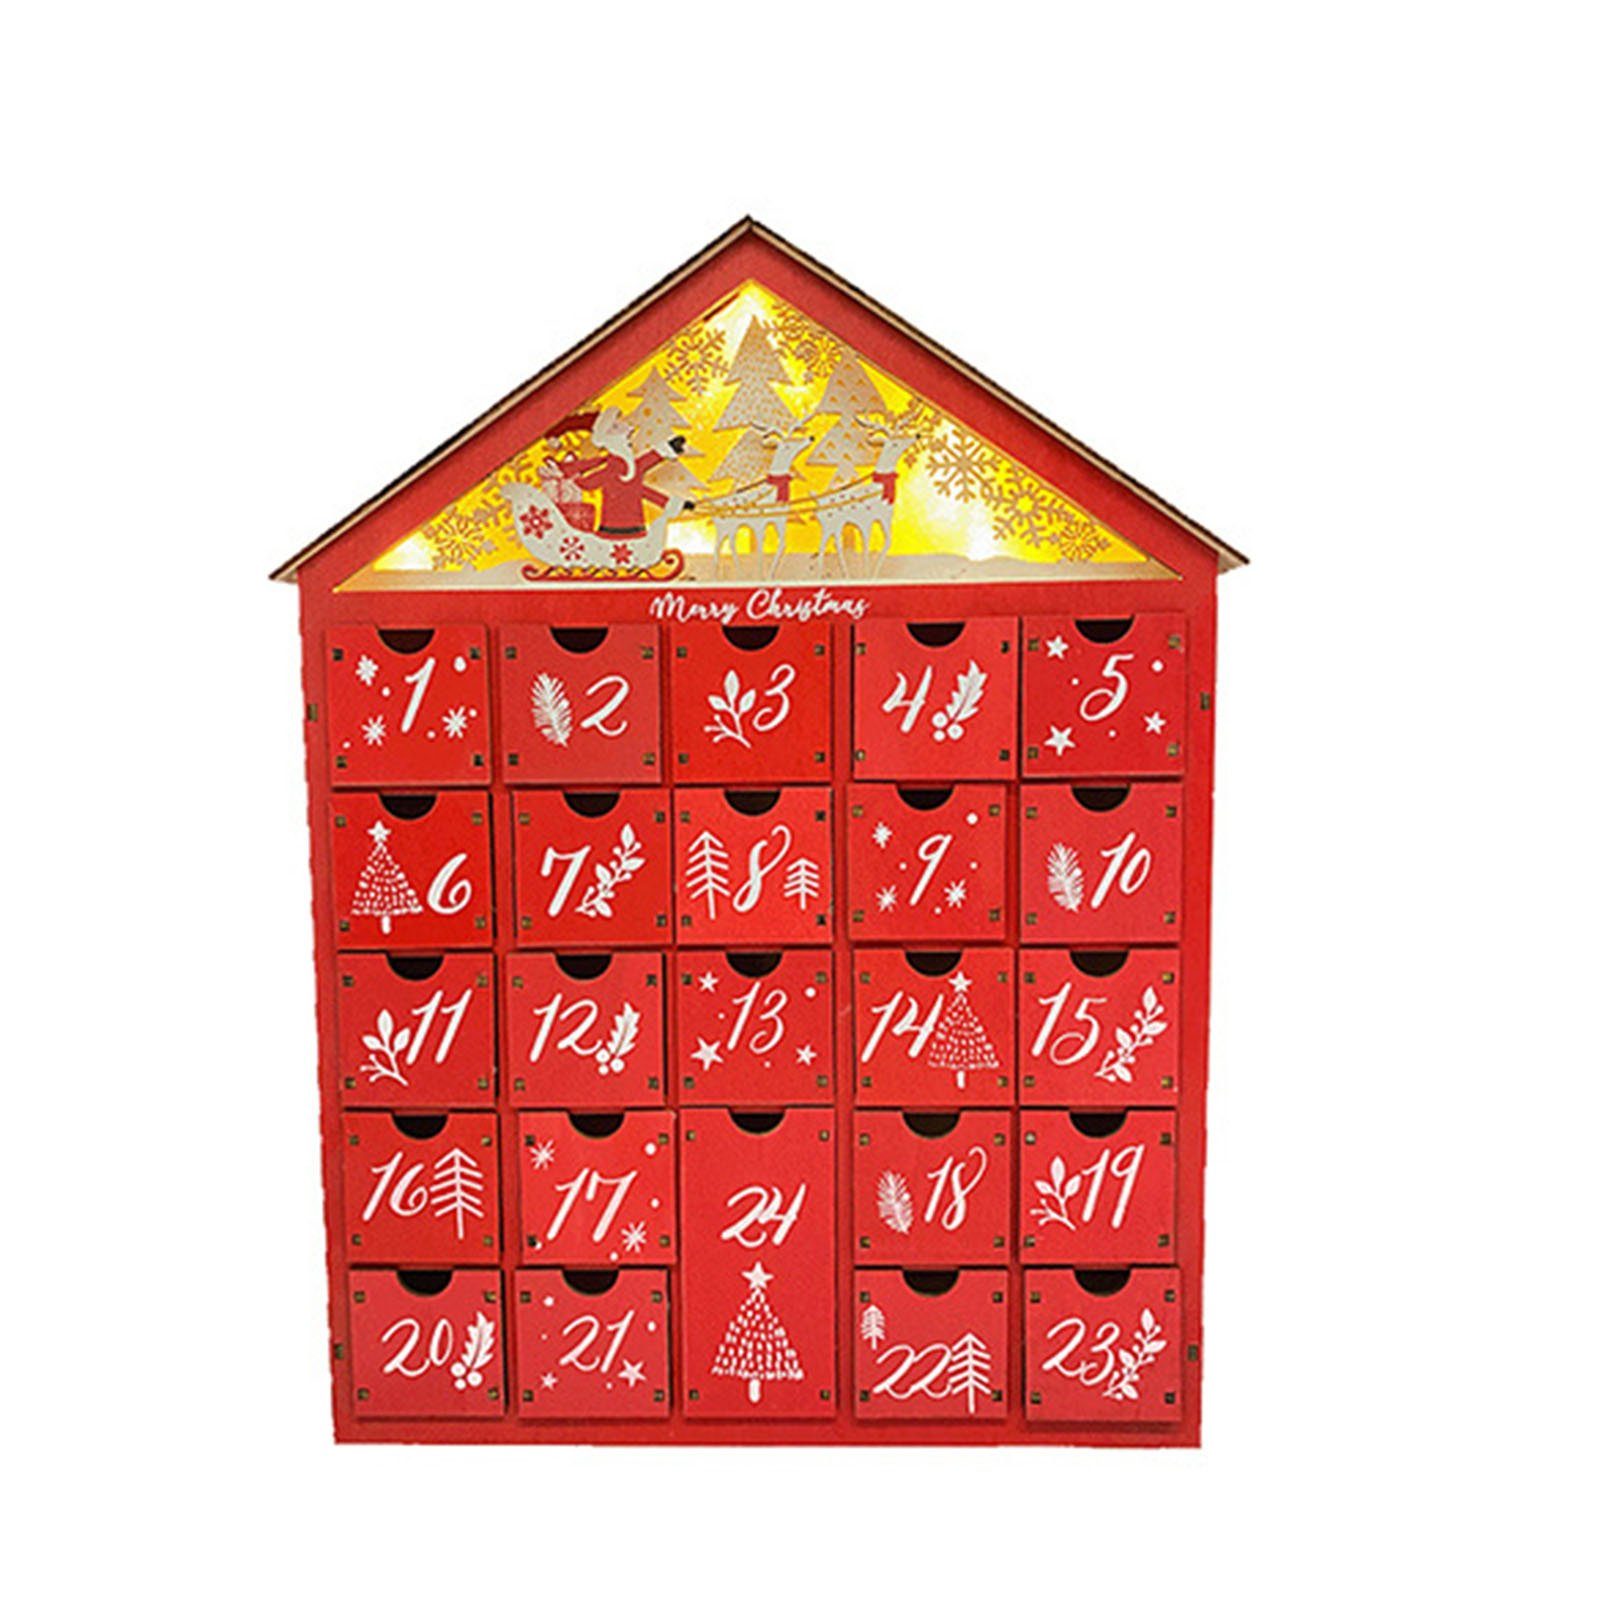 Blusmart Adventskalender 24-Tage-Weihnachts-Countdown-Kalender Aus Holz In Roter Farbe